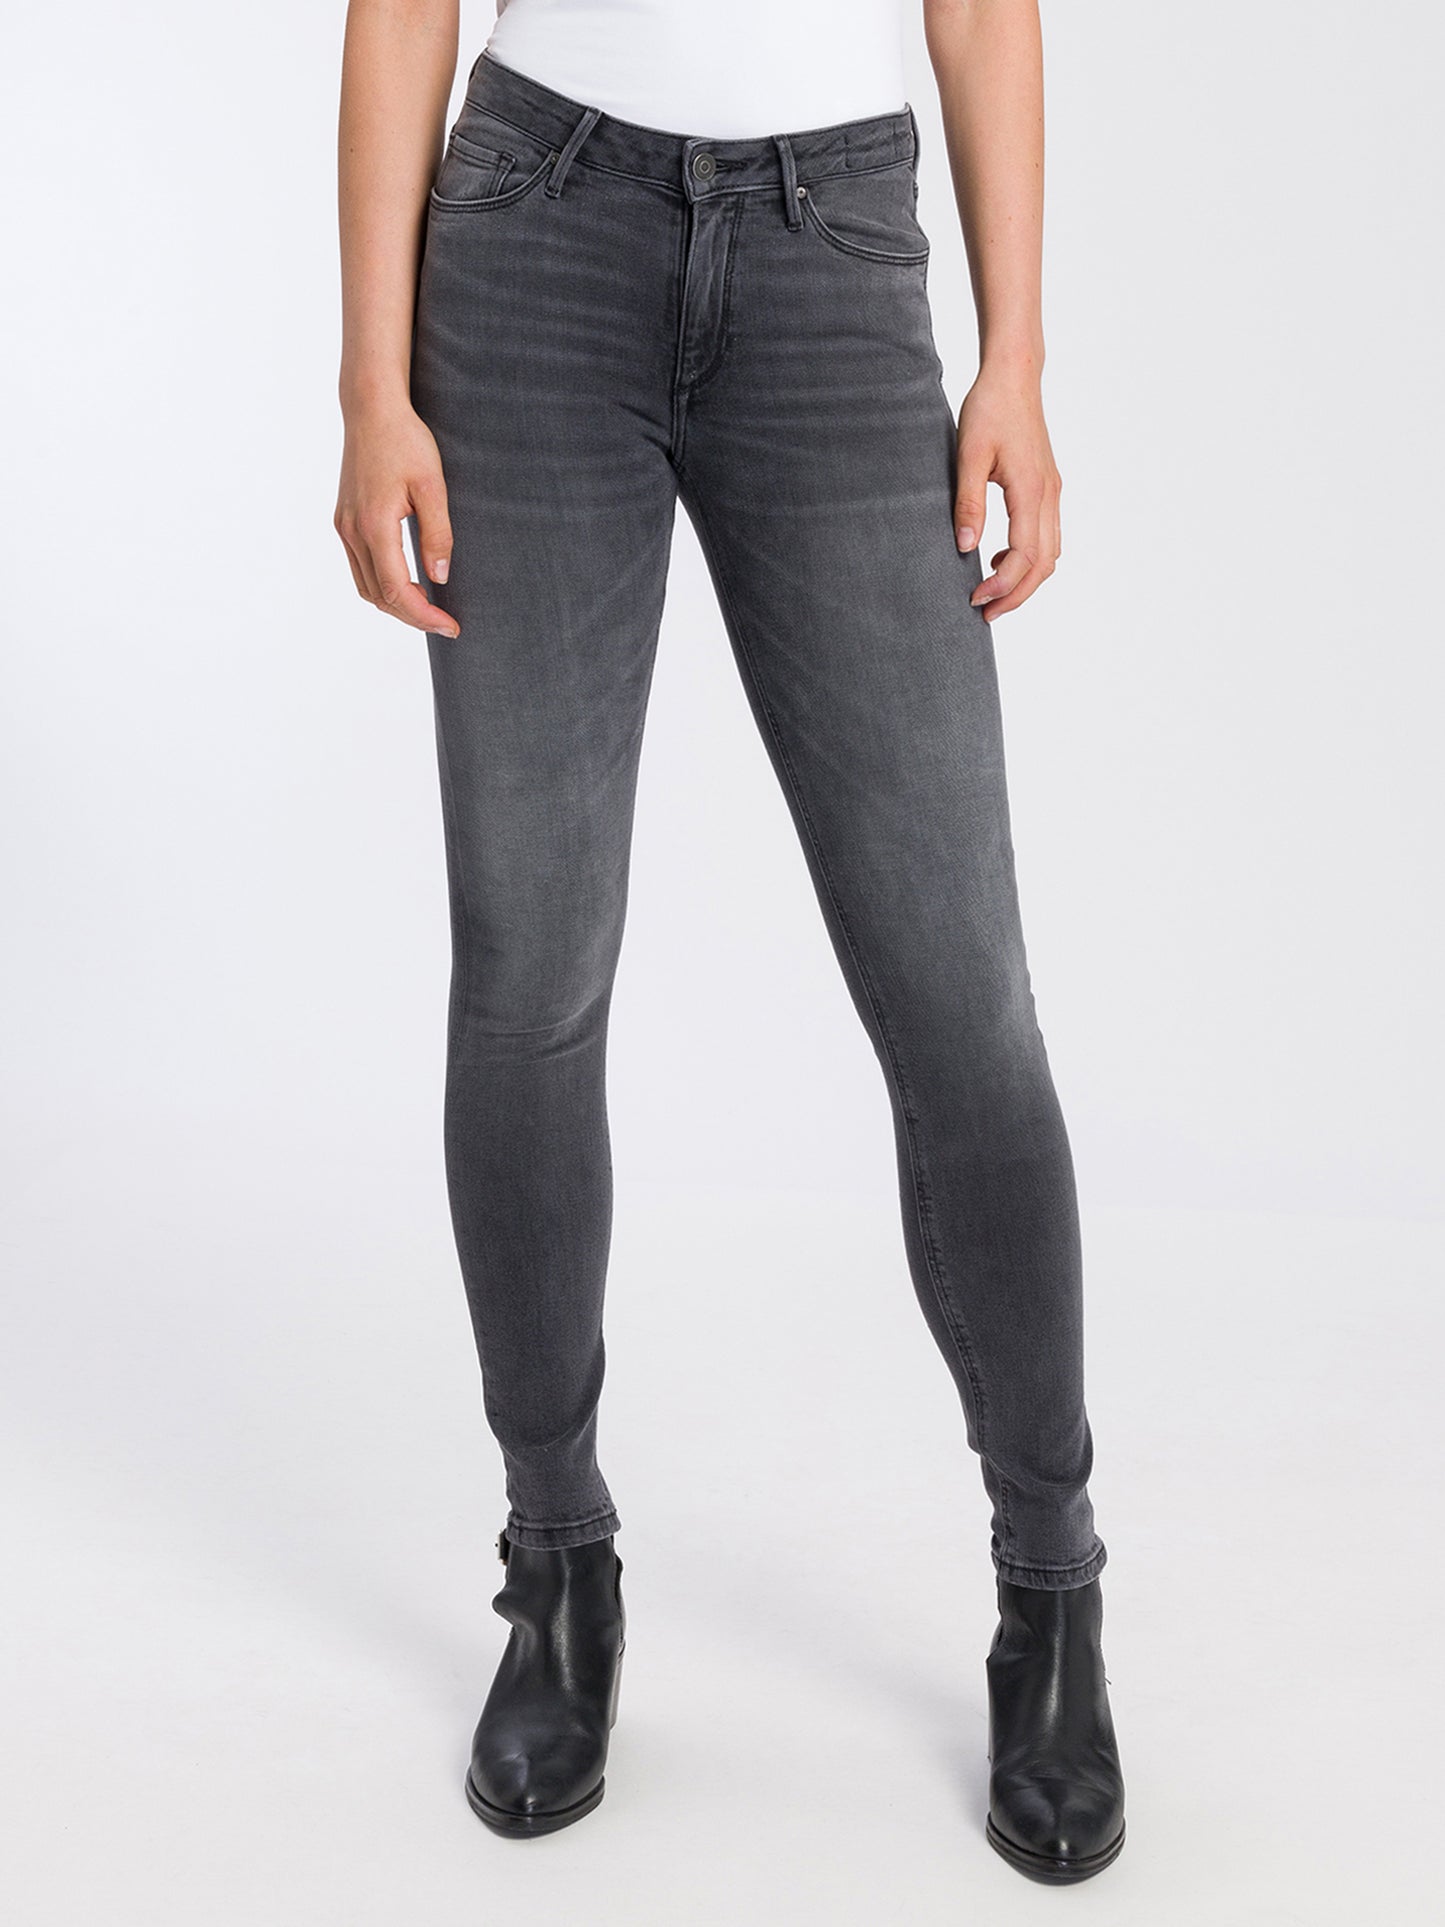 Alan women's jeans skinny fit high waist grey